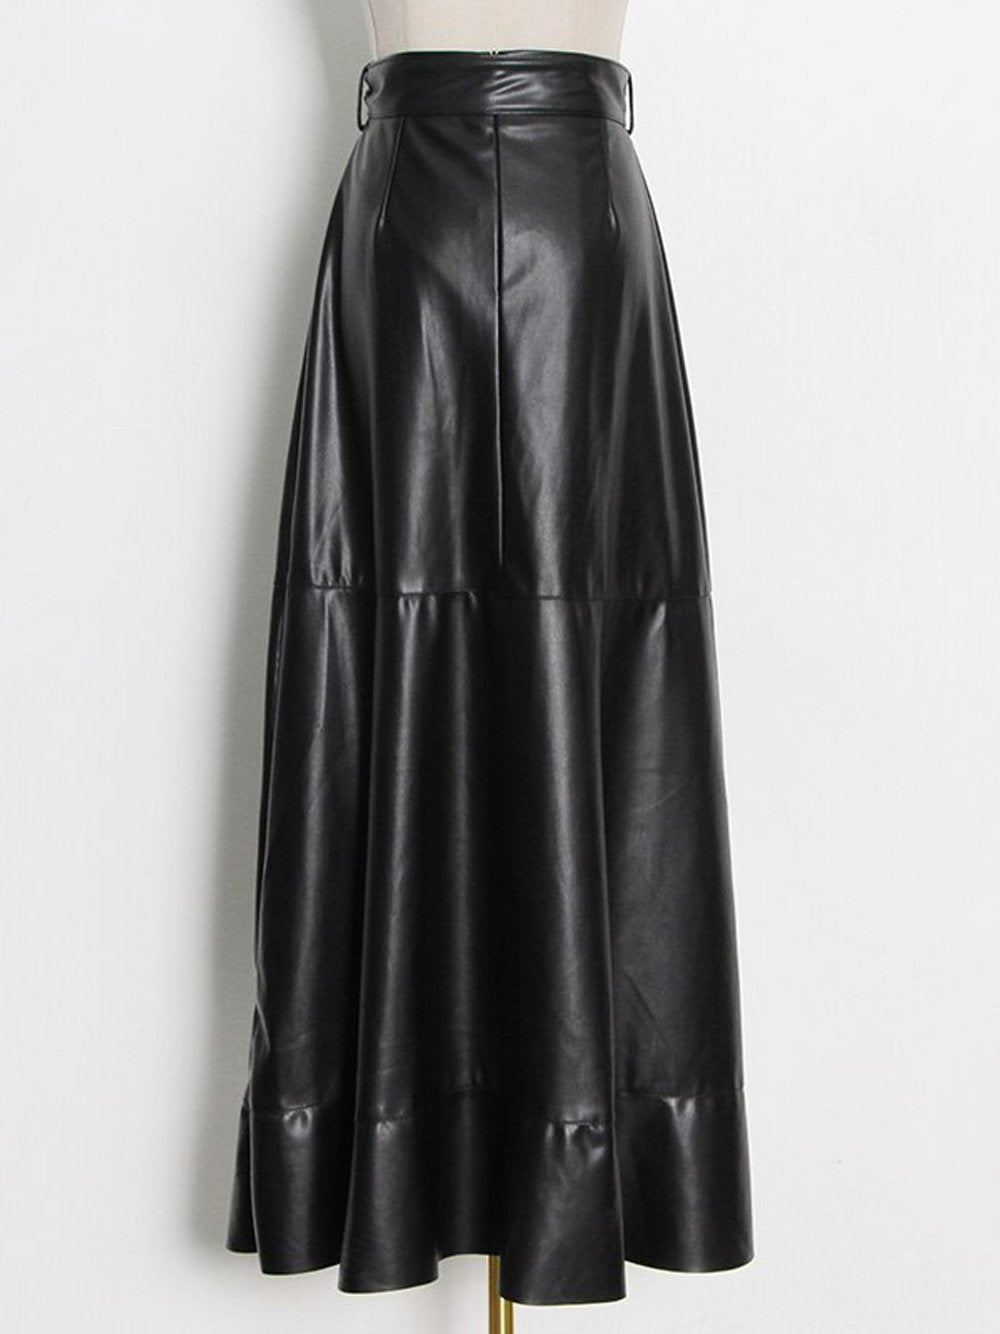 CELOSIA Blouse & Leather Skirt Set